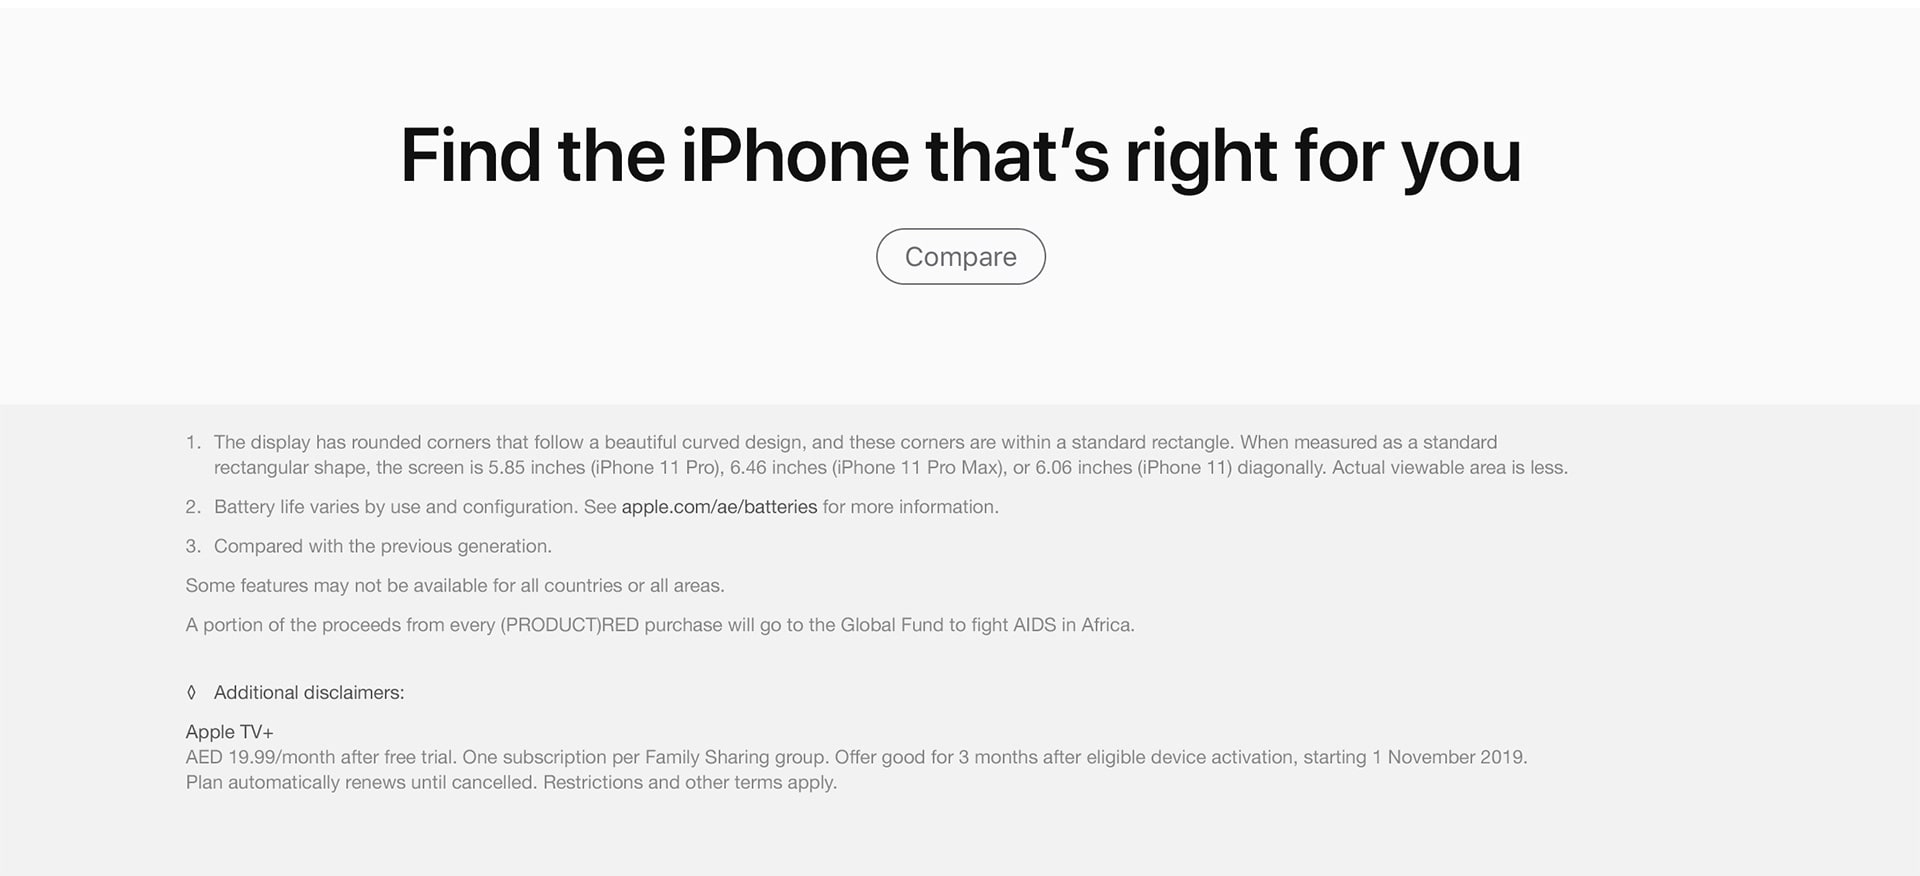 apple-iphone11-pro-max-price-etisalat-uae-overview-6